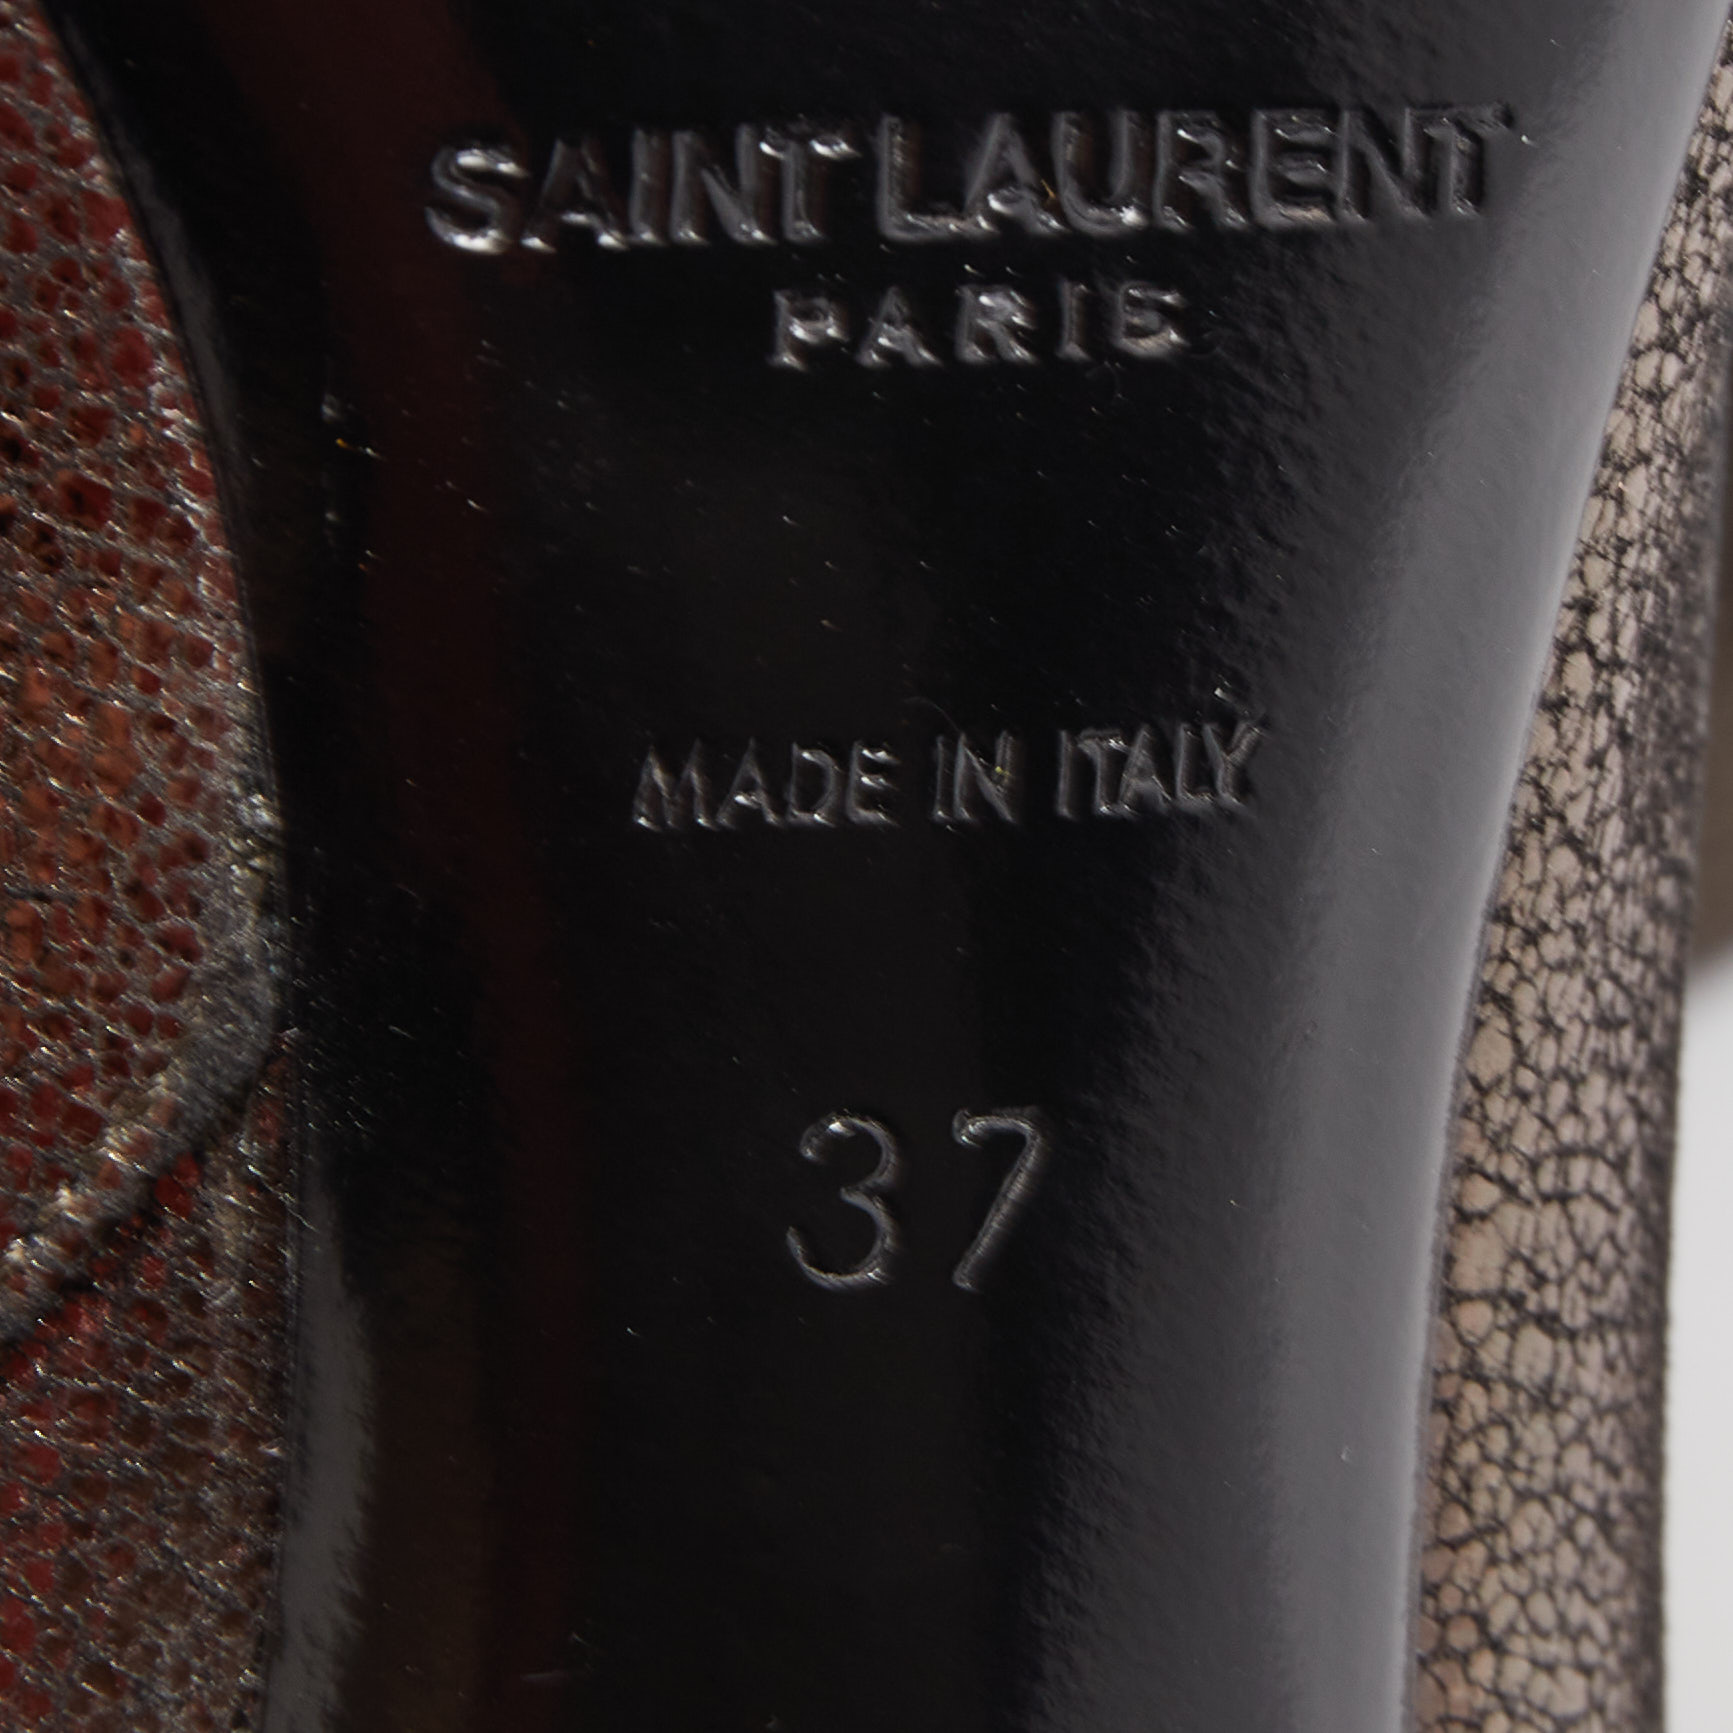 Saint Laurent Paris Metallic Foil Leather Block Heel Ankle Booties Size 37